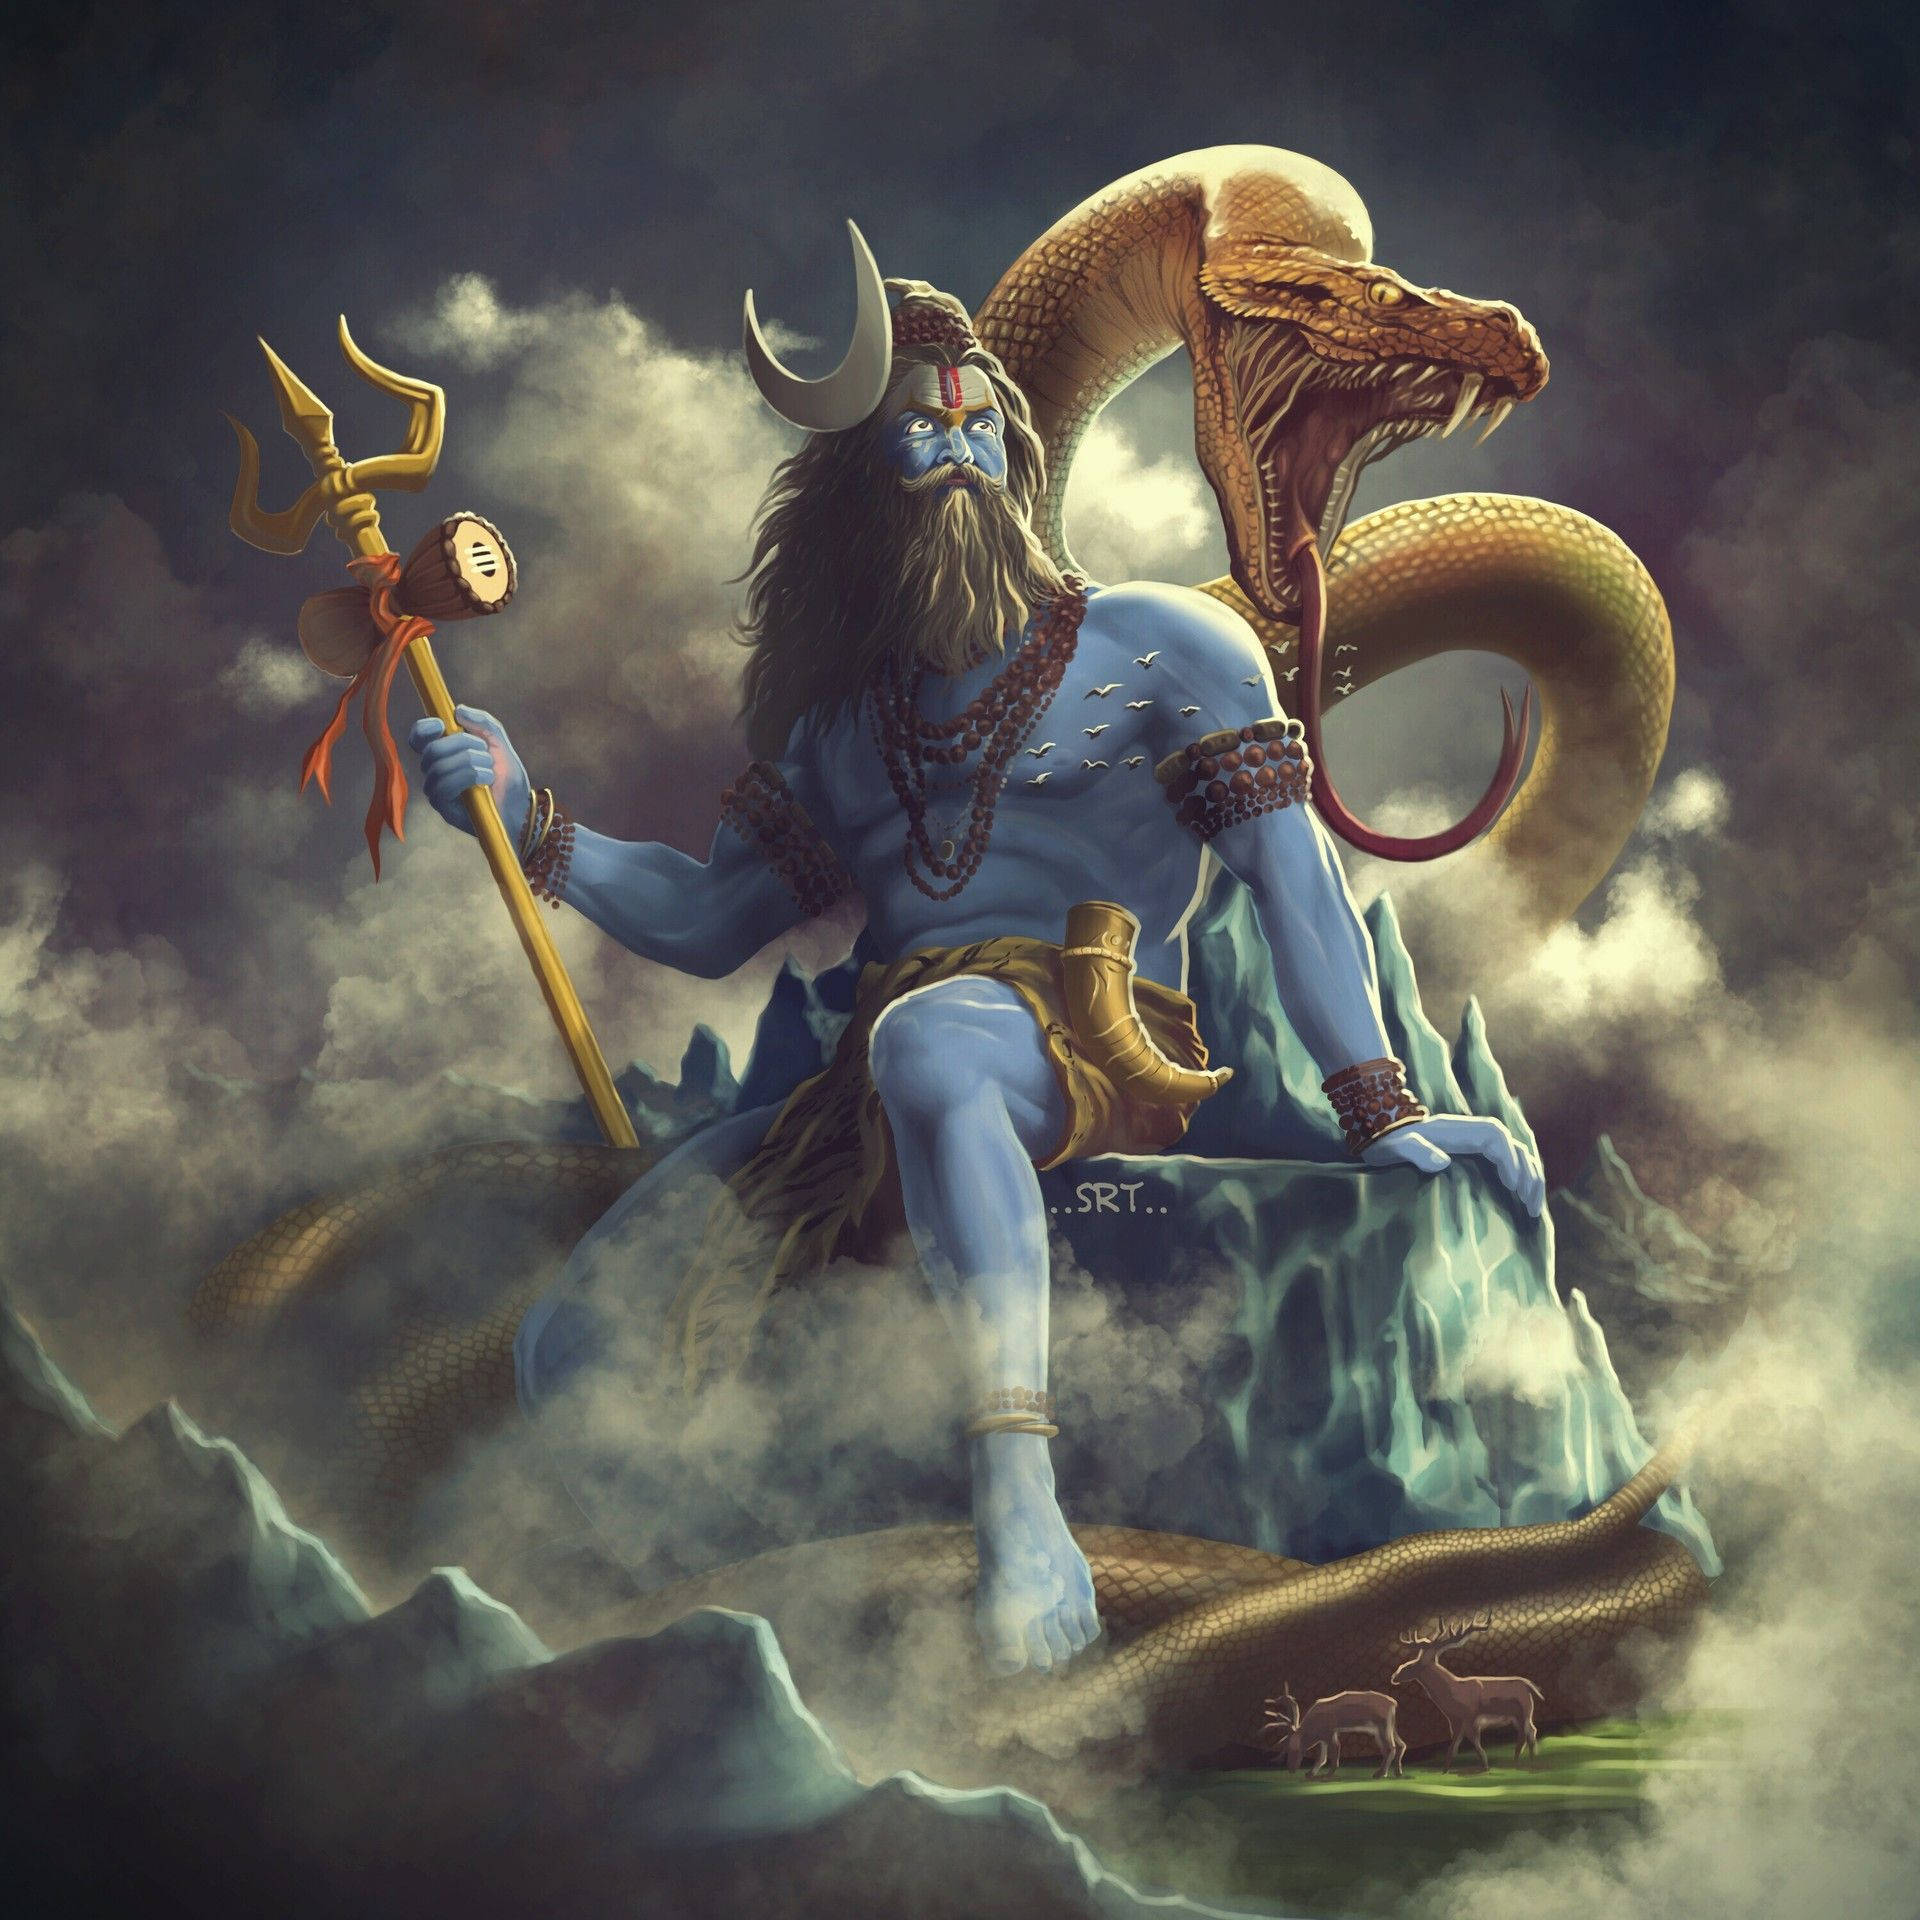 Bholenath Hd Shiva With Golden Snake